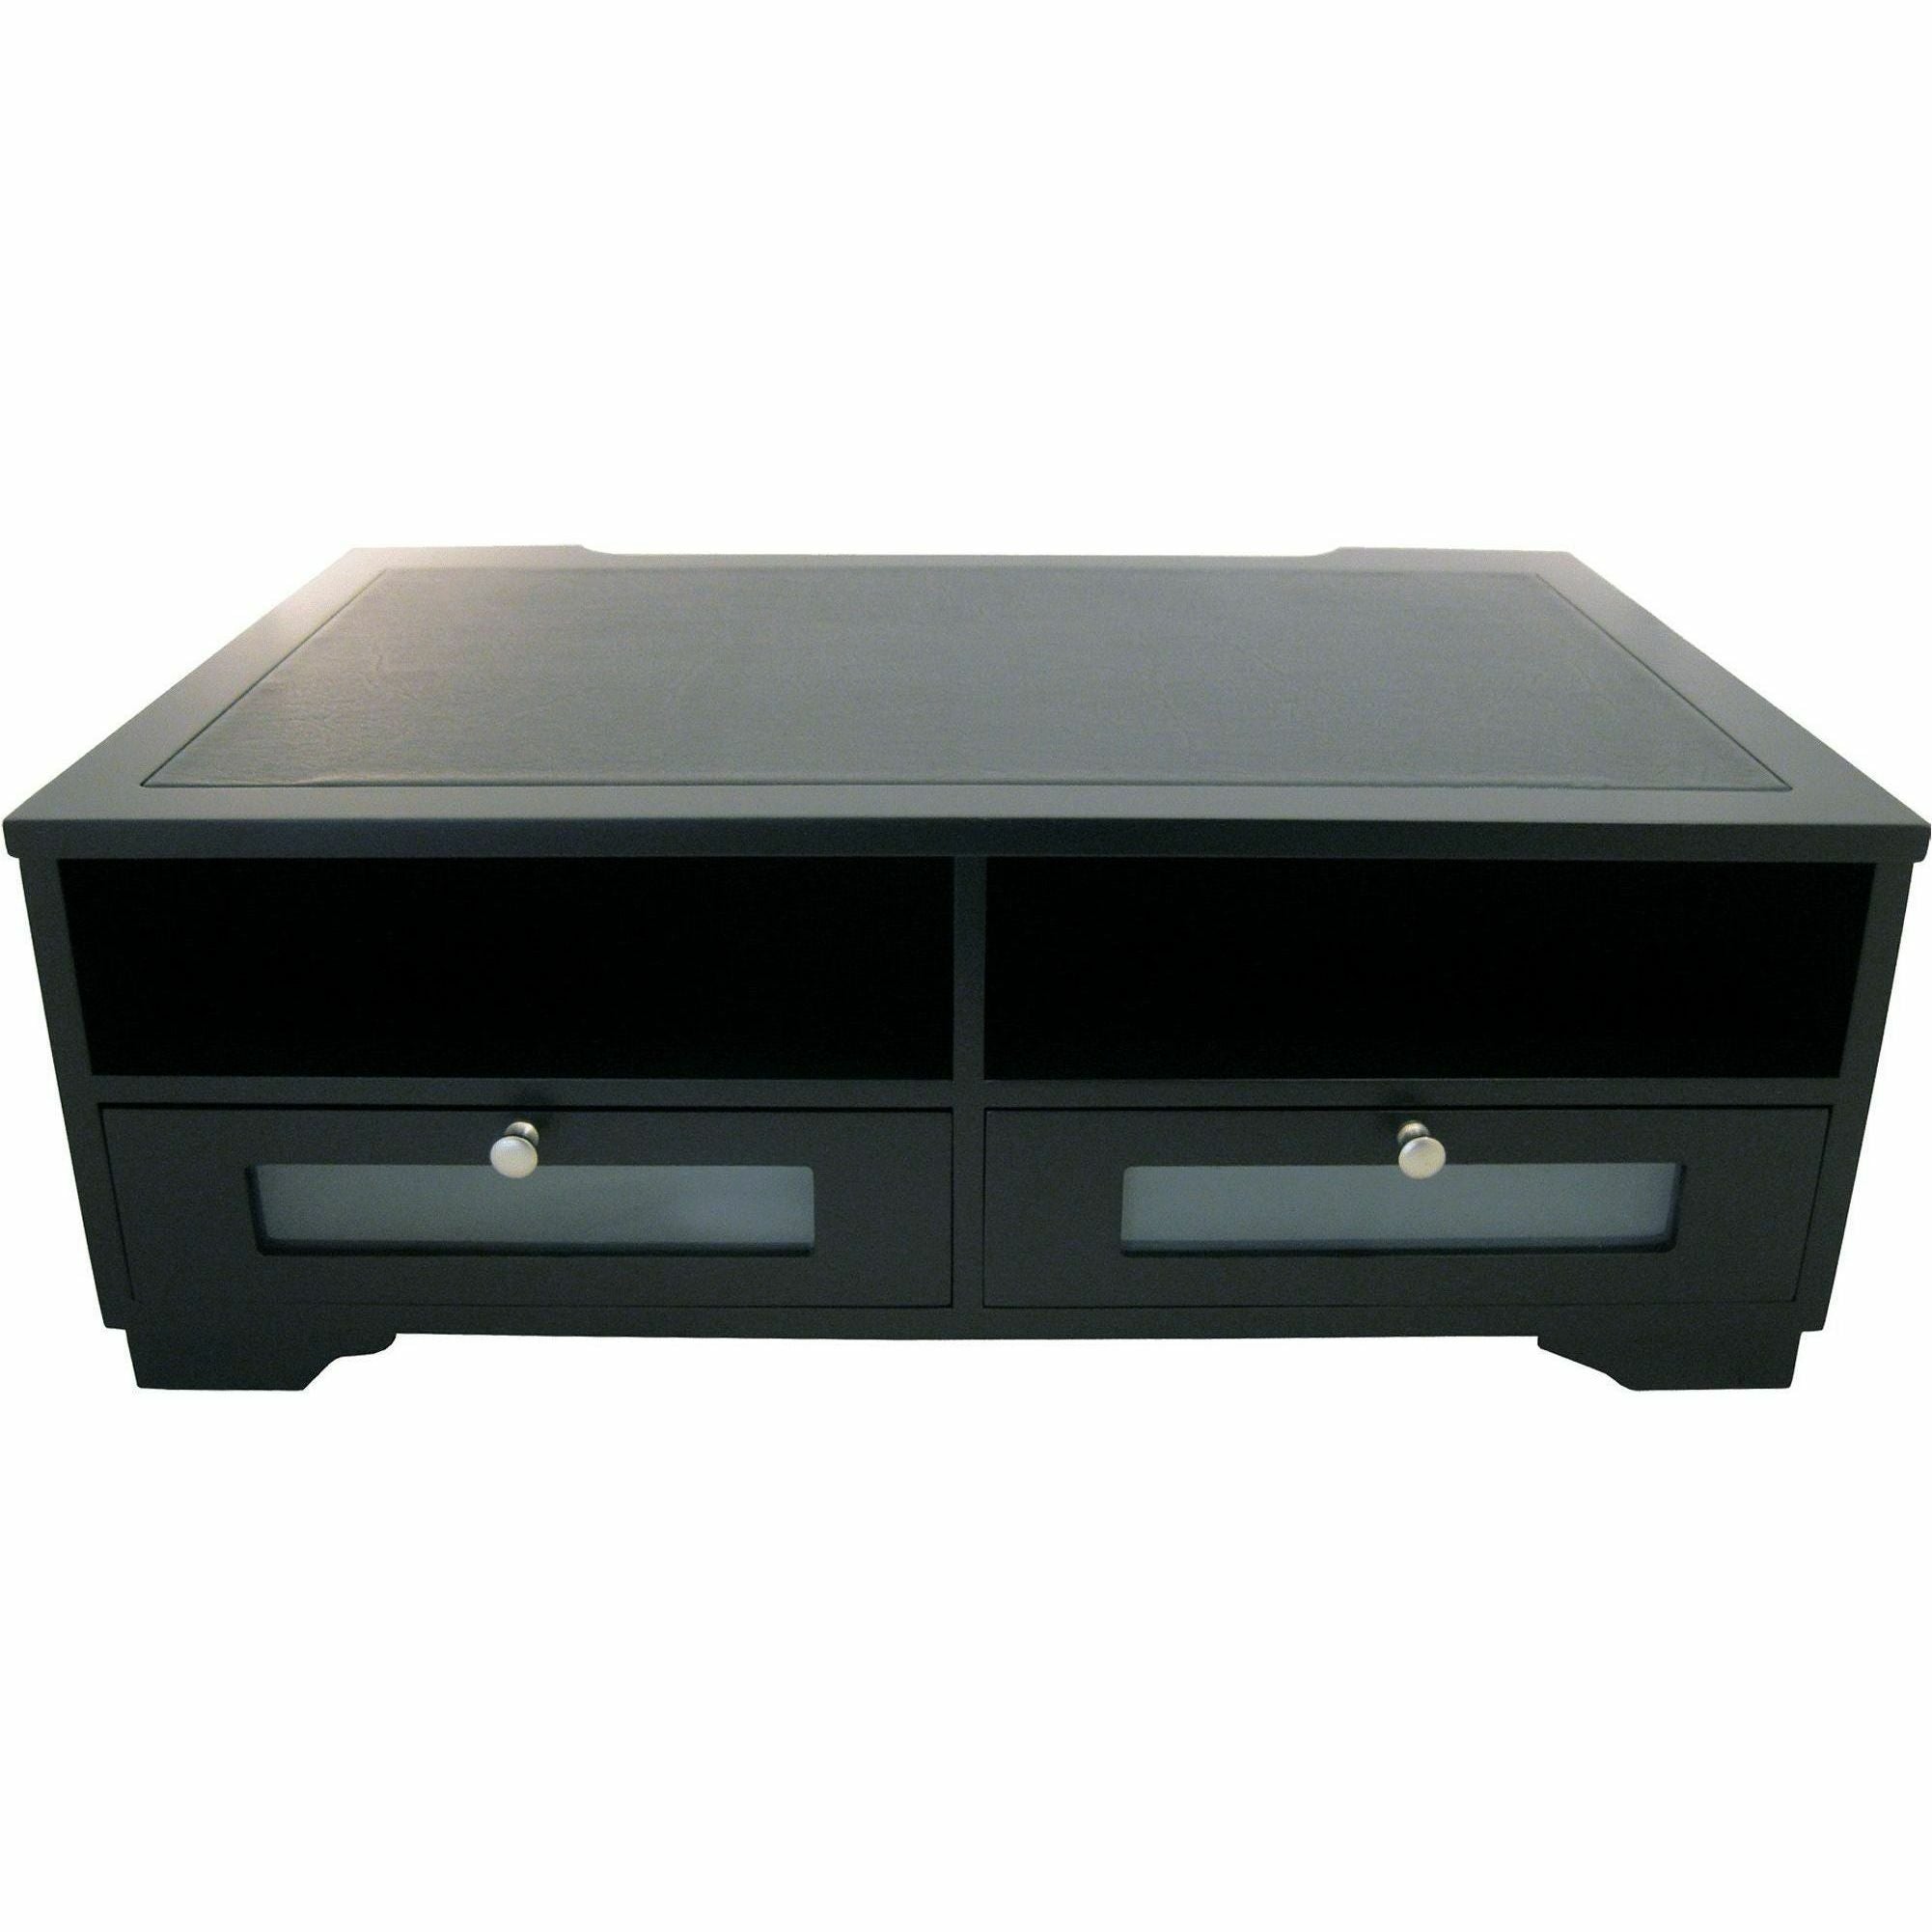 Victor 1130-5 Midnight Black Printer Stand - 2 x Shelf(ves) - 7.8" Height x 21.8" Width x 15.3" Depth - Desktop - Matte - Wood, Glass - Black - 